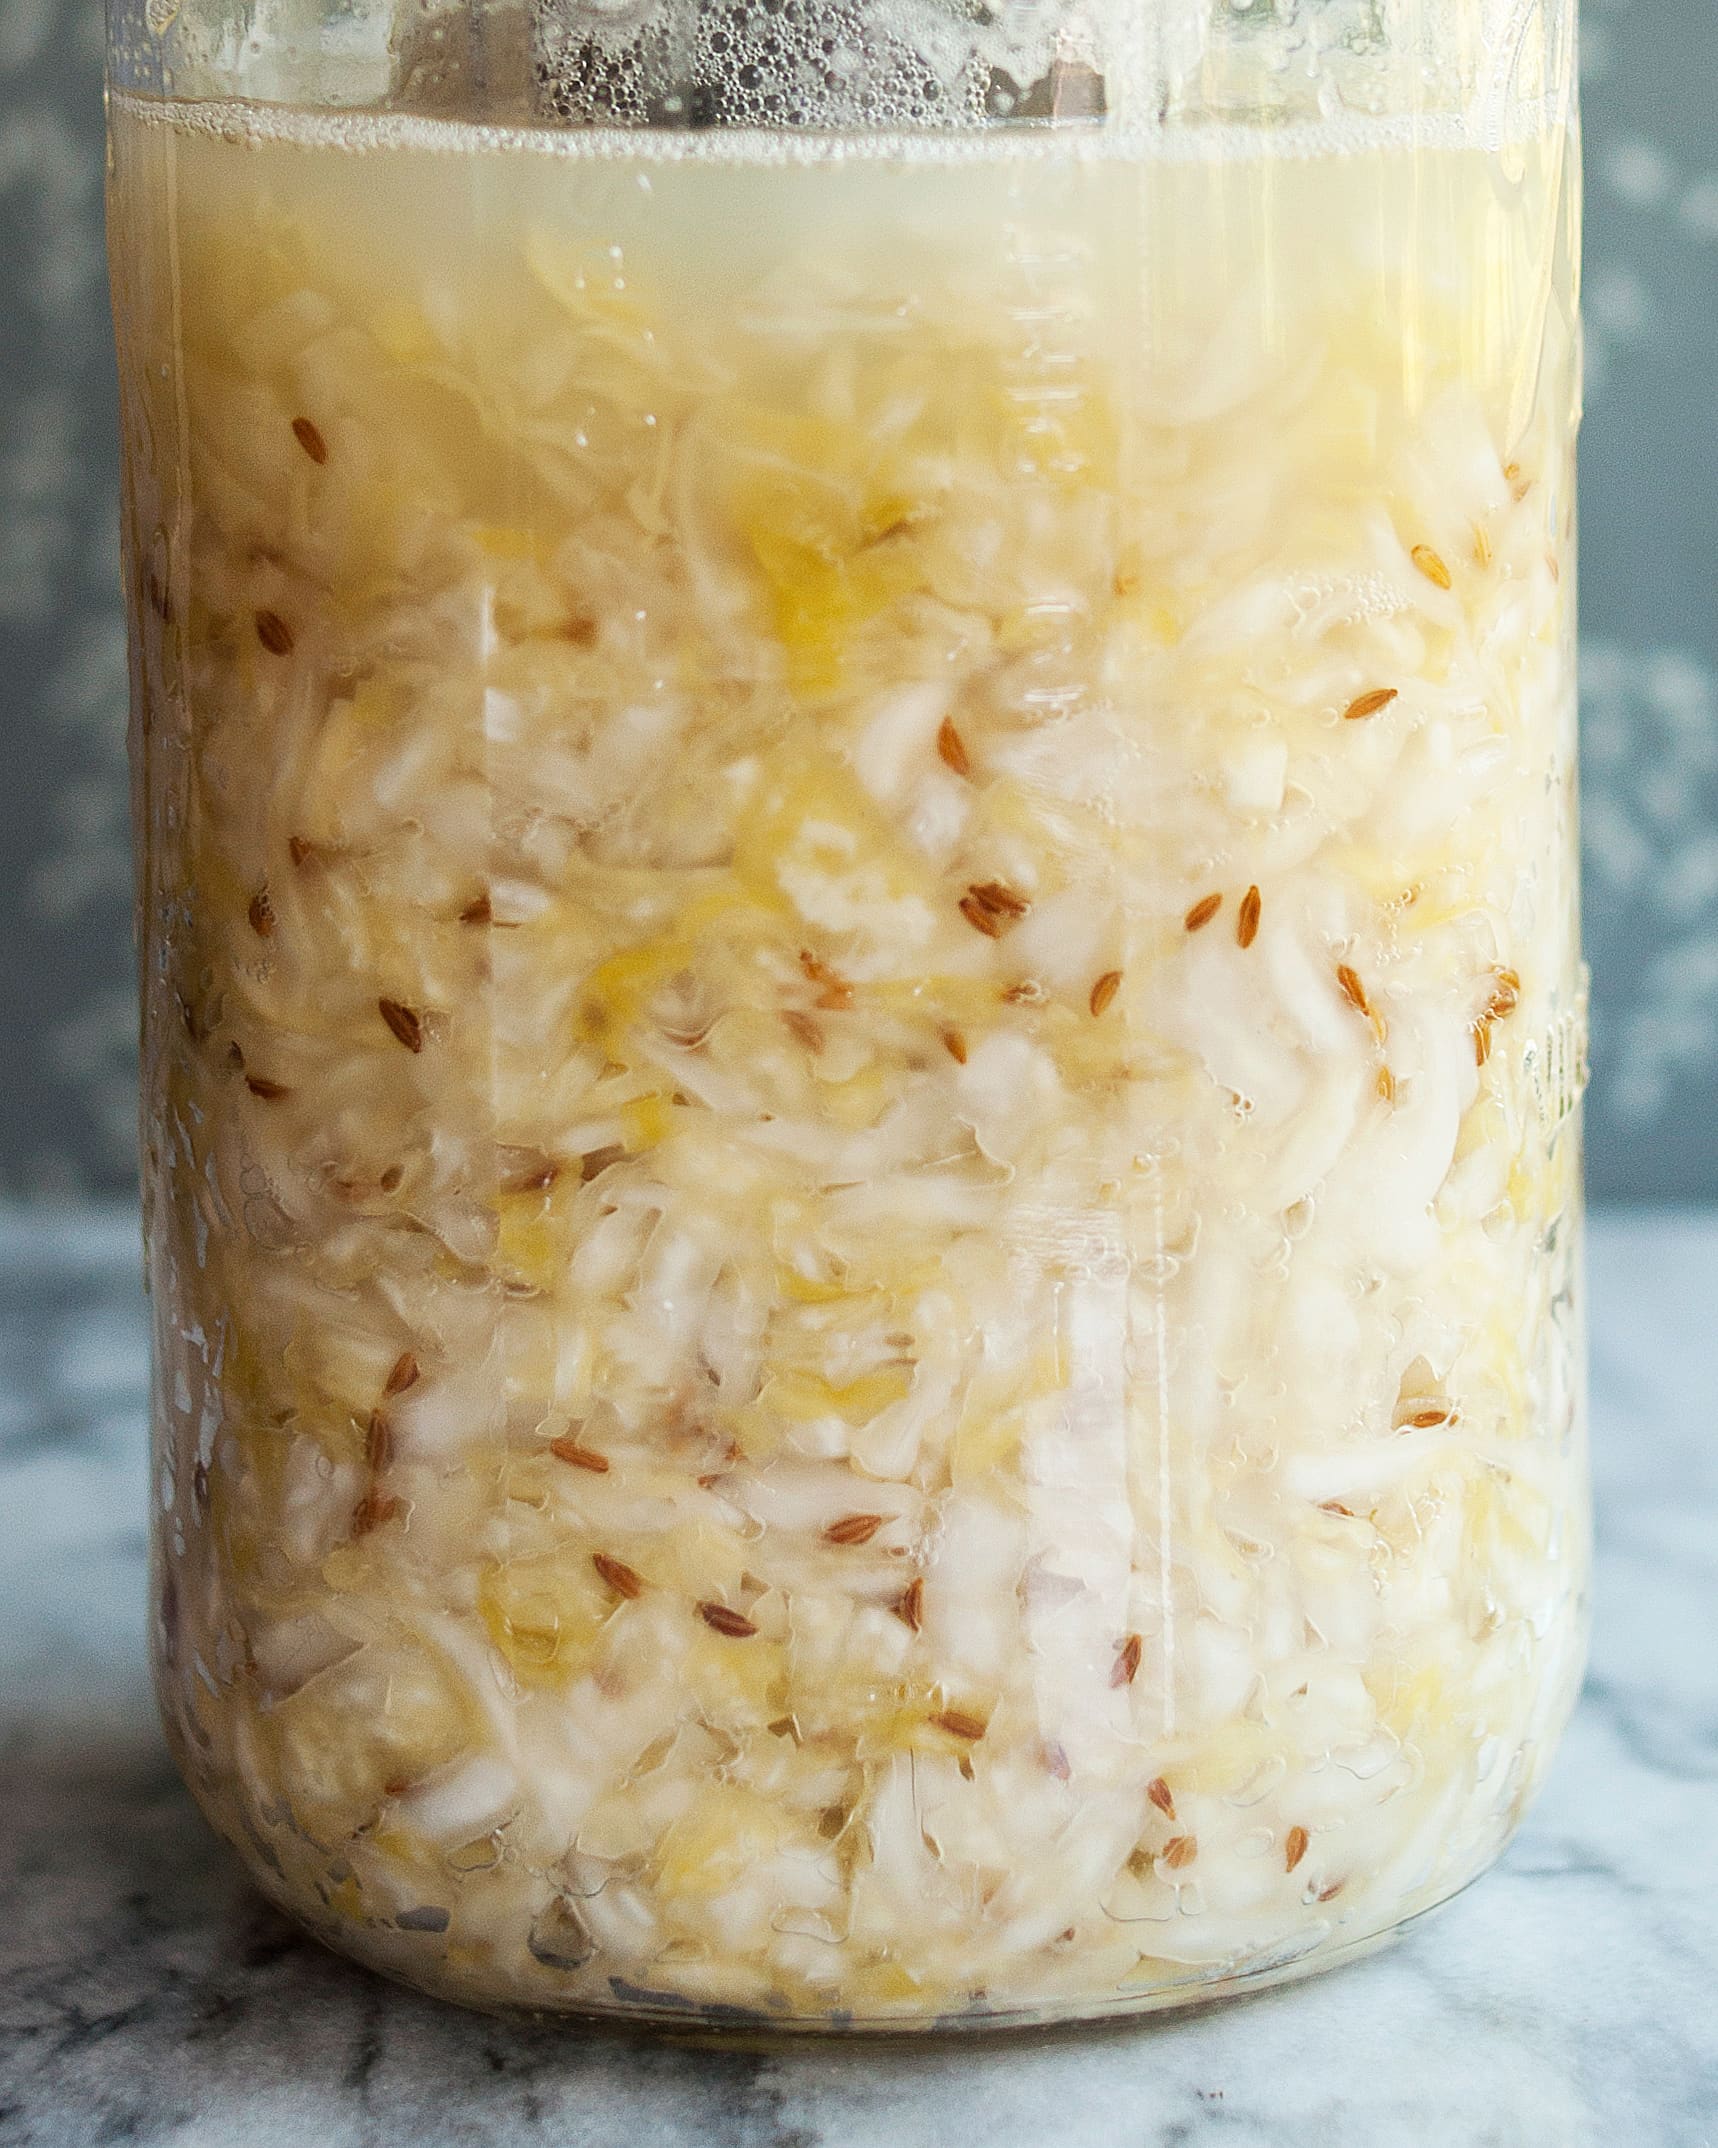 to Make Sauerkraut Mason Jar Recipe for Small Batches) | The Kitchn